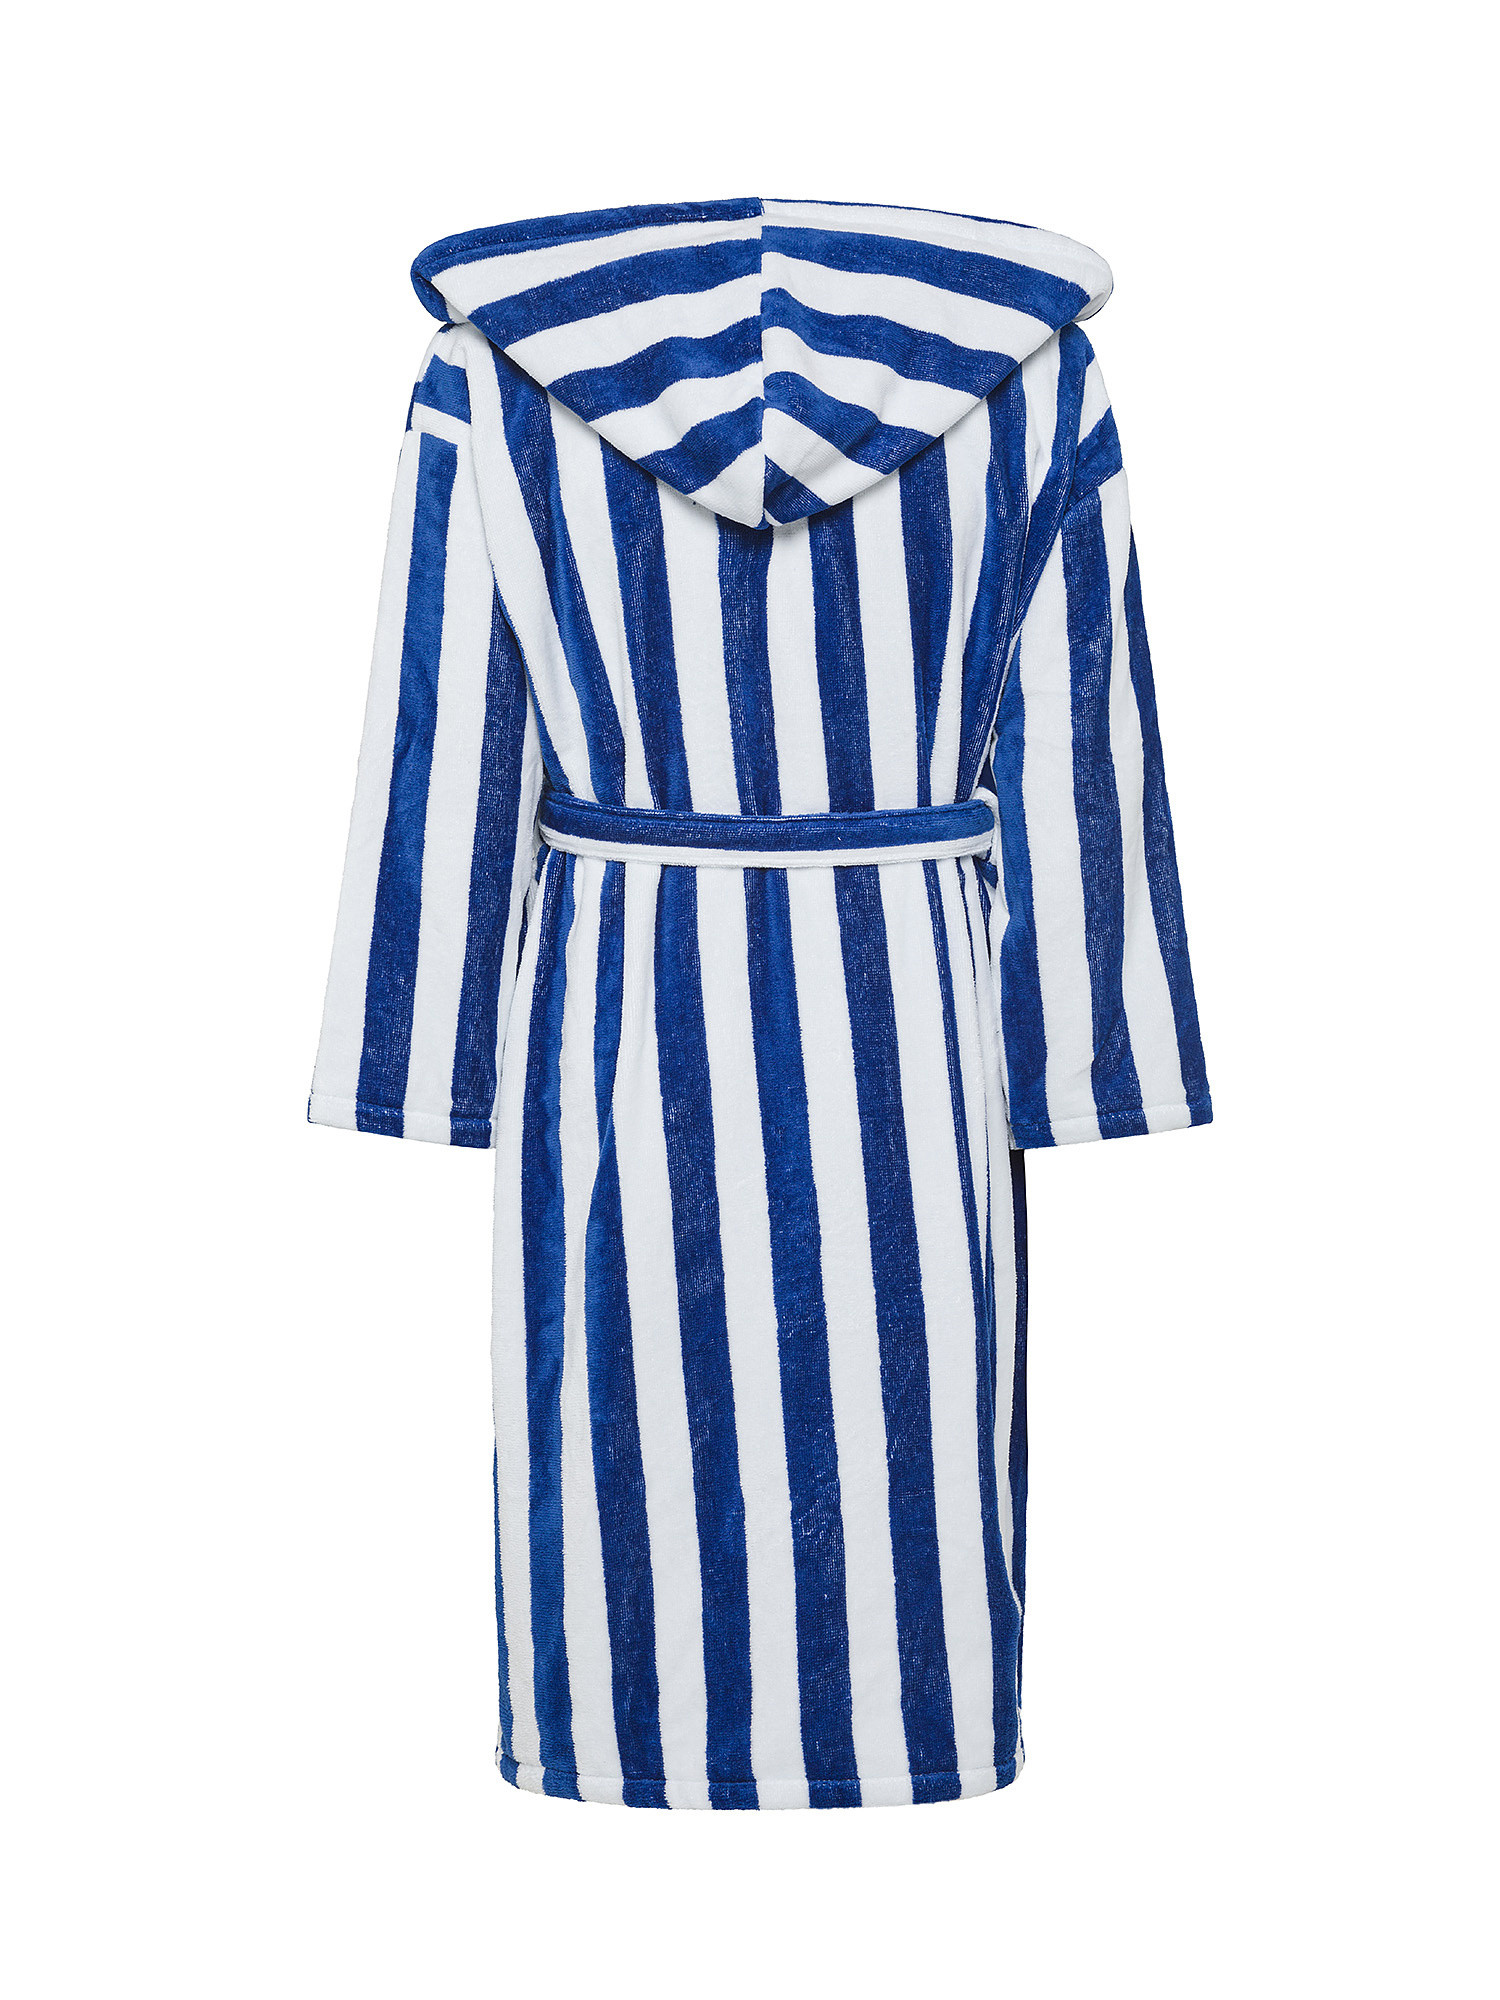 Cotton velor bathrobe with sailor stripes motif, Blue, large image number 1